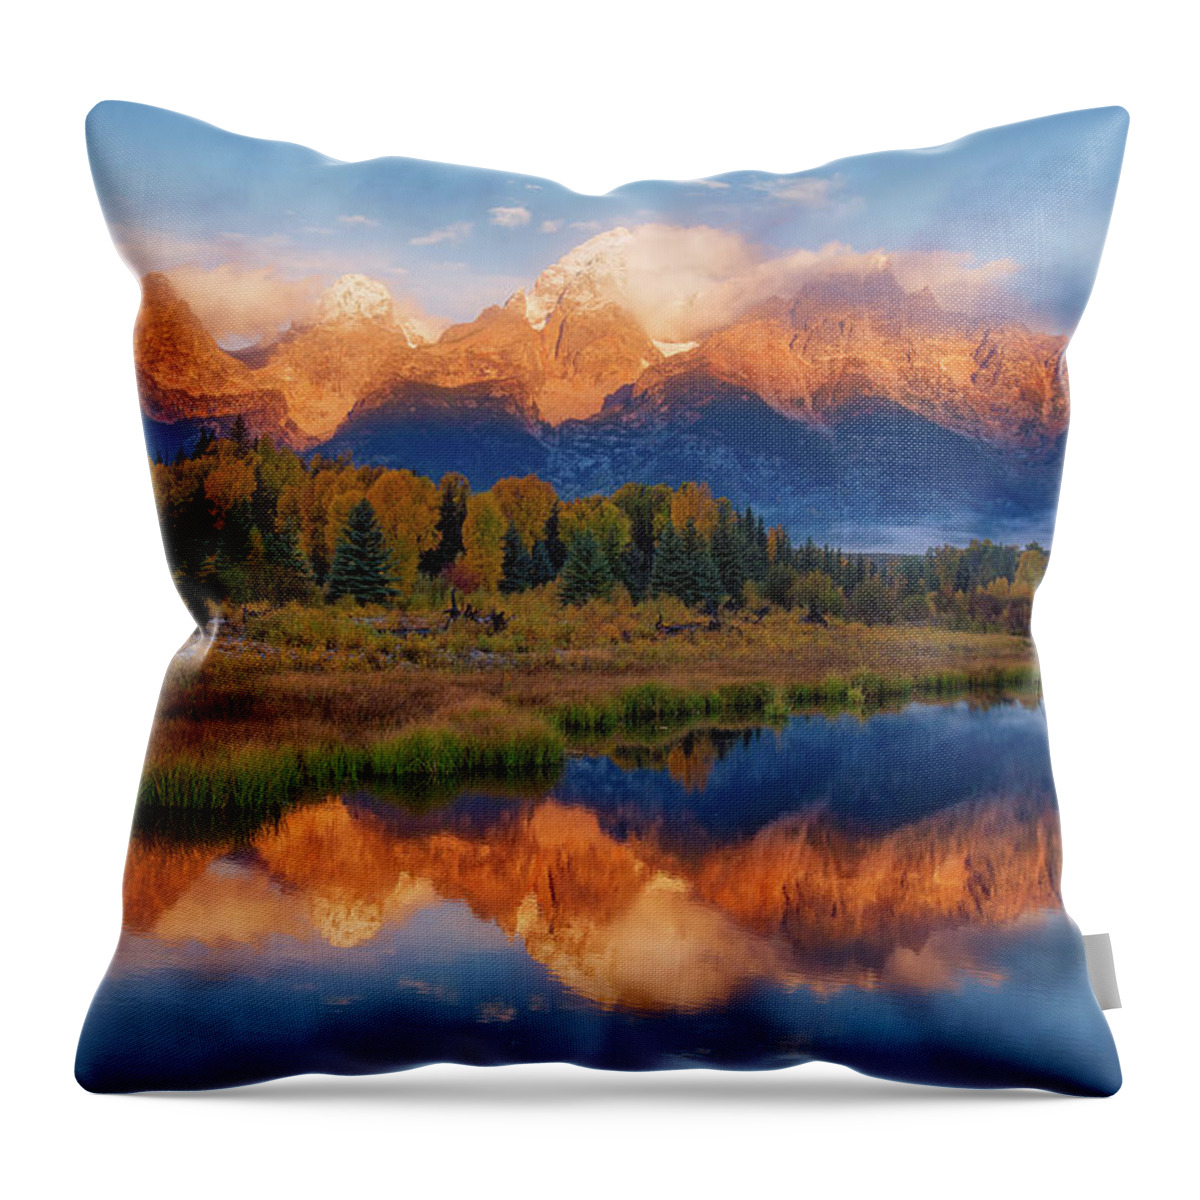 Grand Teton National Park Throw Pillow featuring the photograph Teton Morning by Darren White